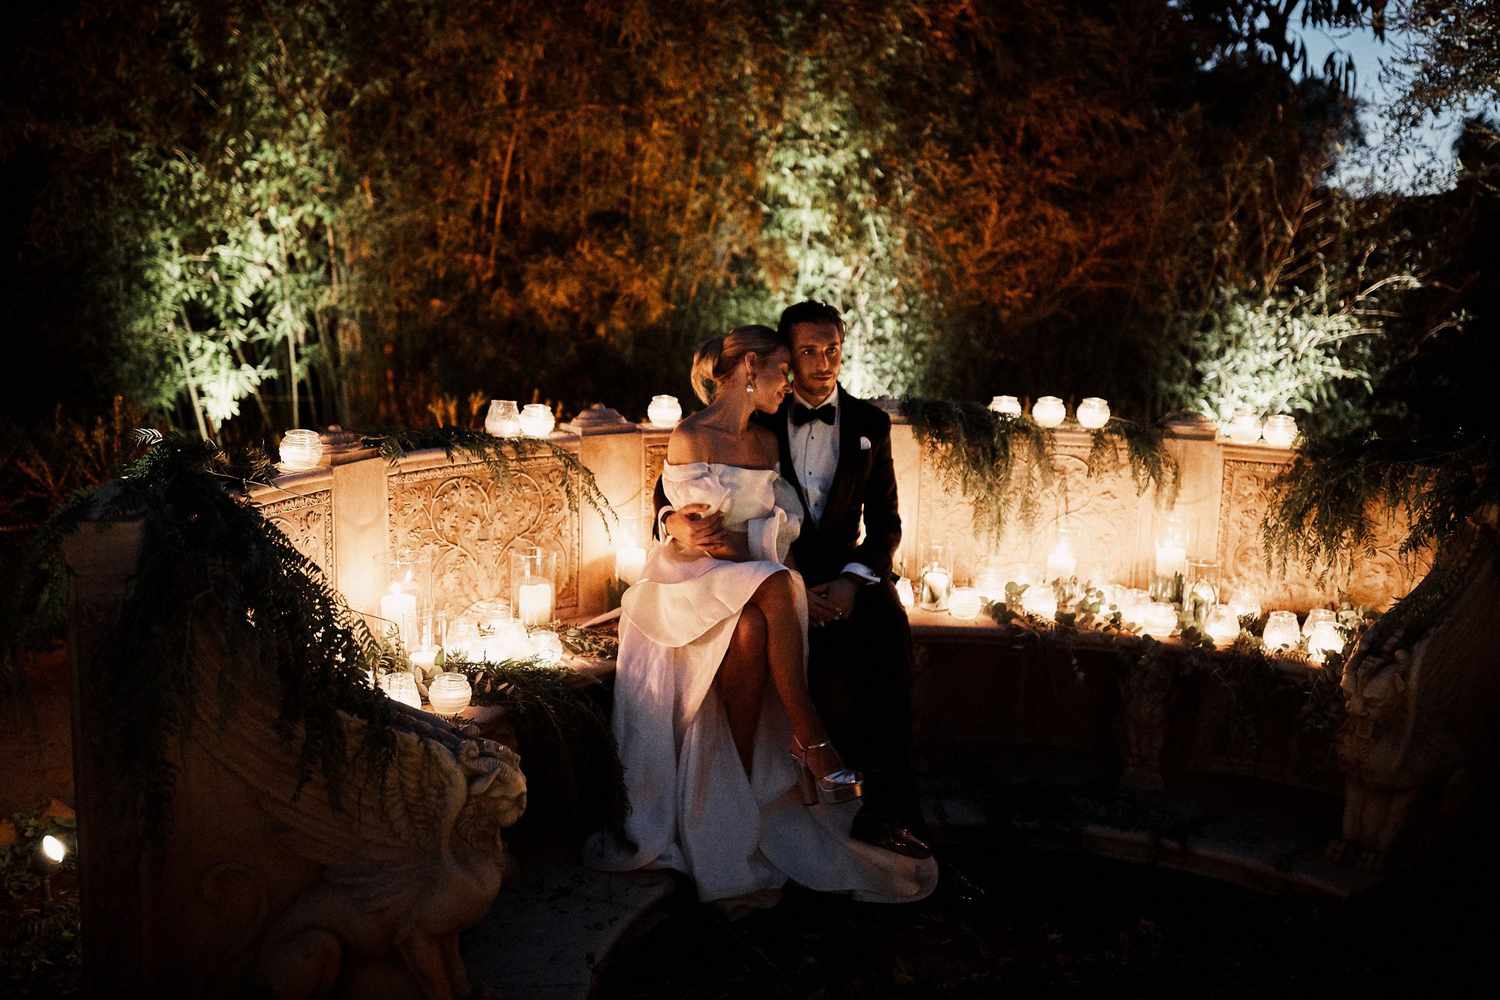 karolina sorab wedding couple hugging surrounded by candles